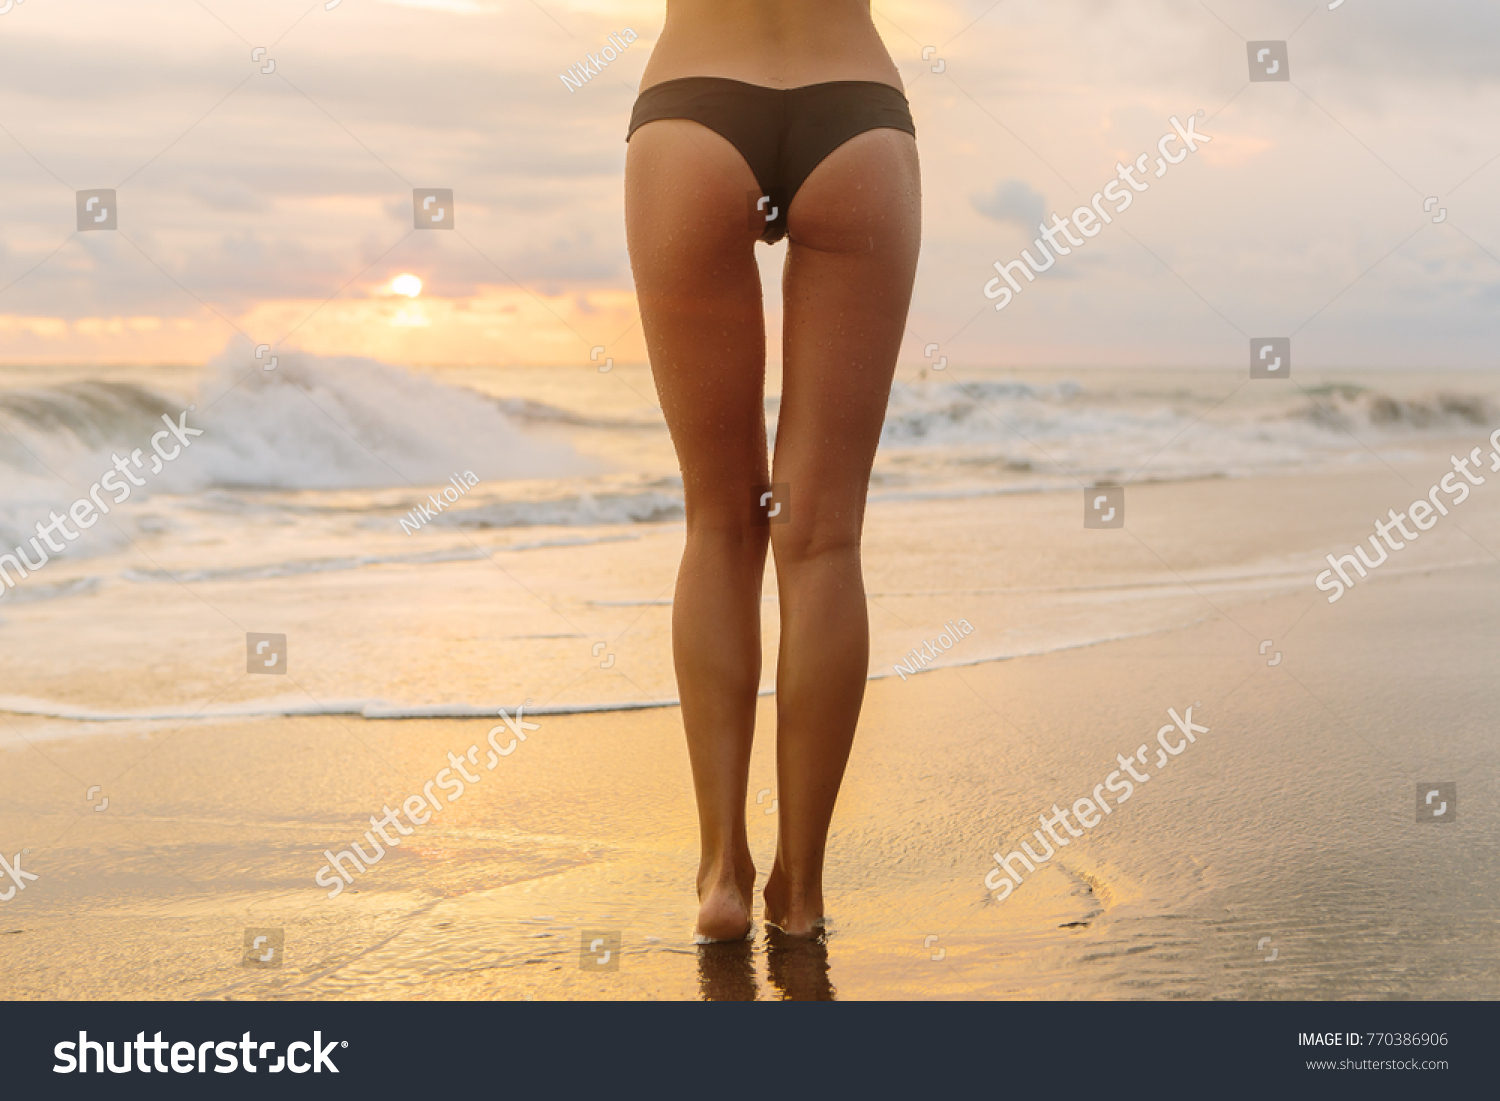 Beach Butt Plug